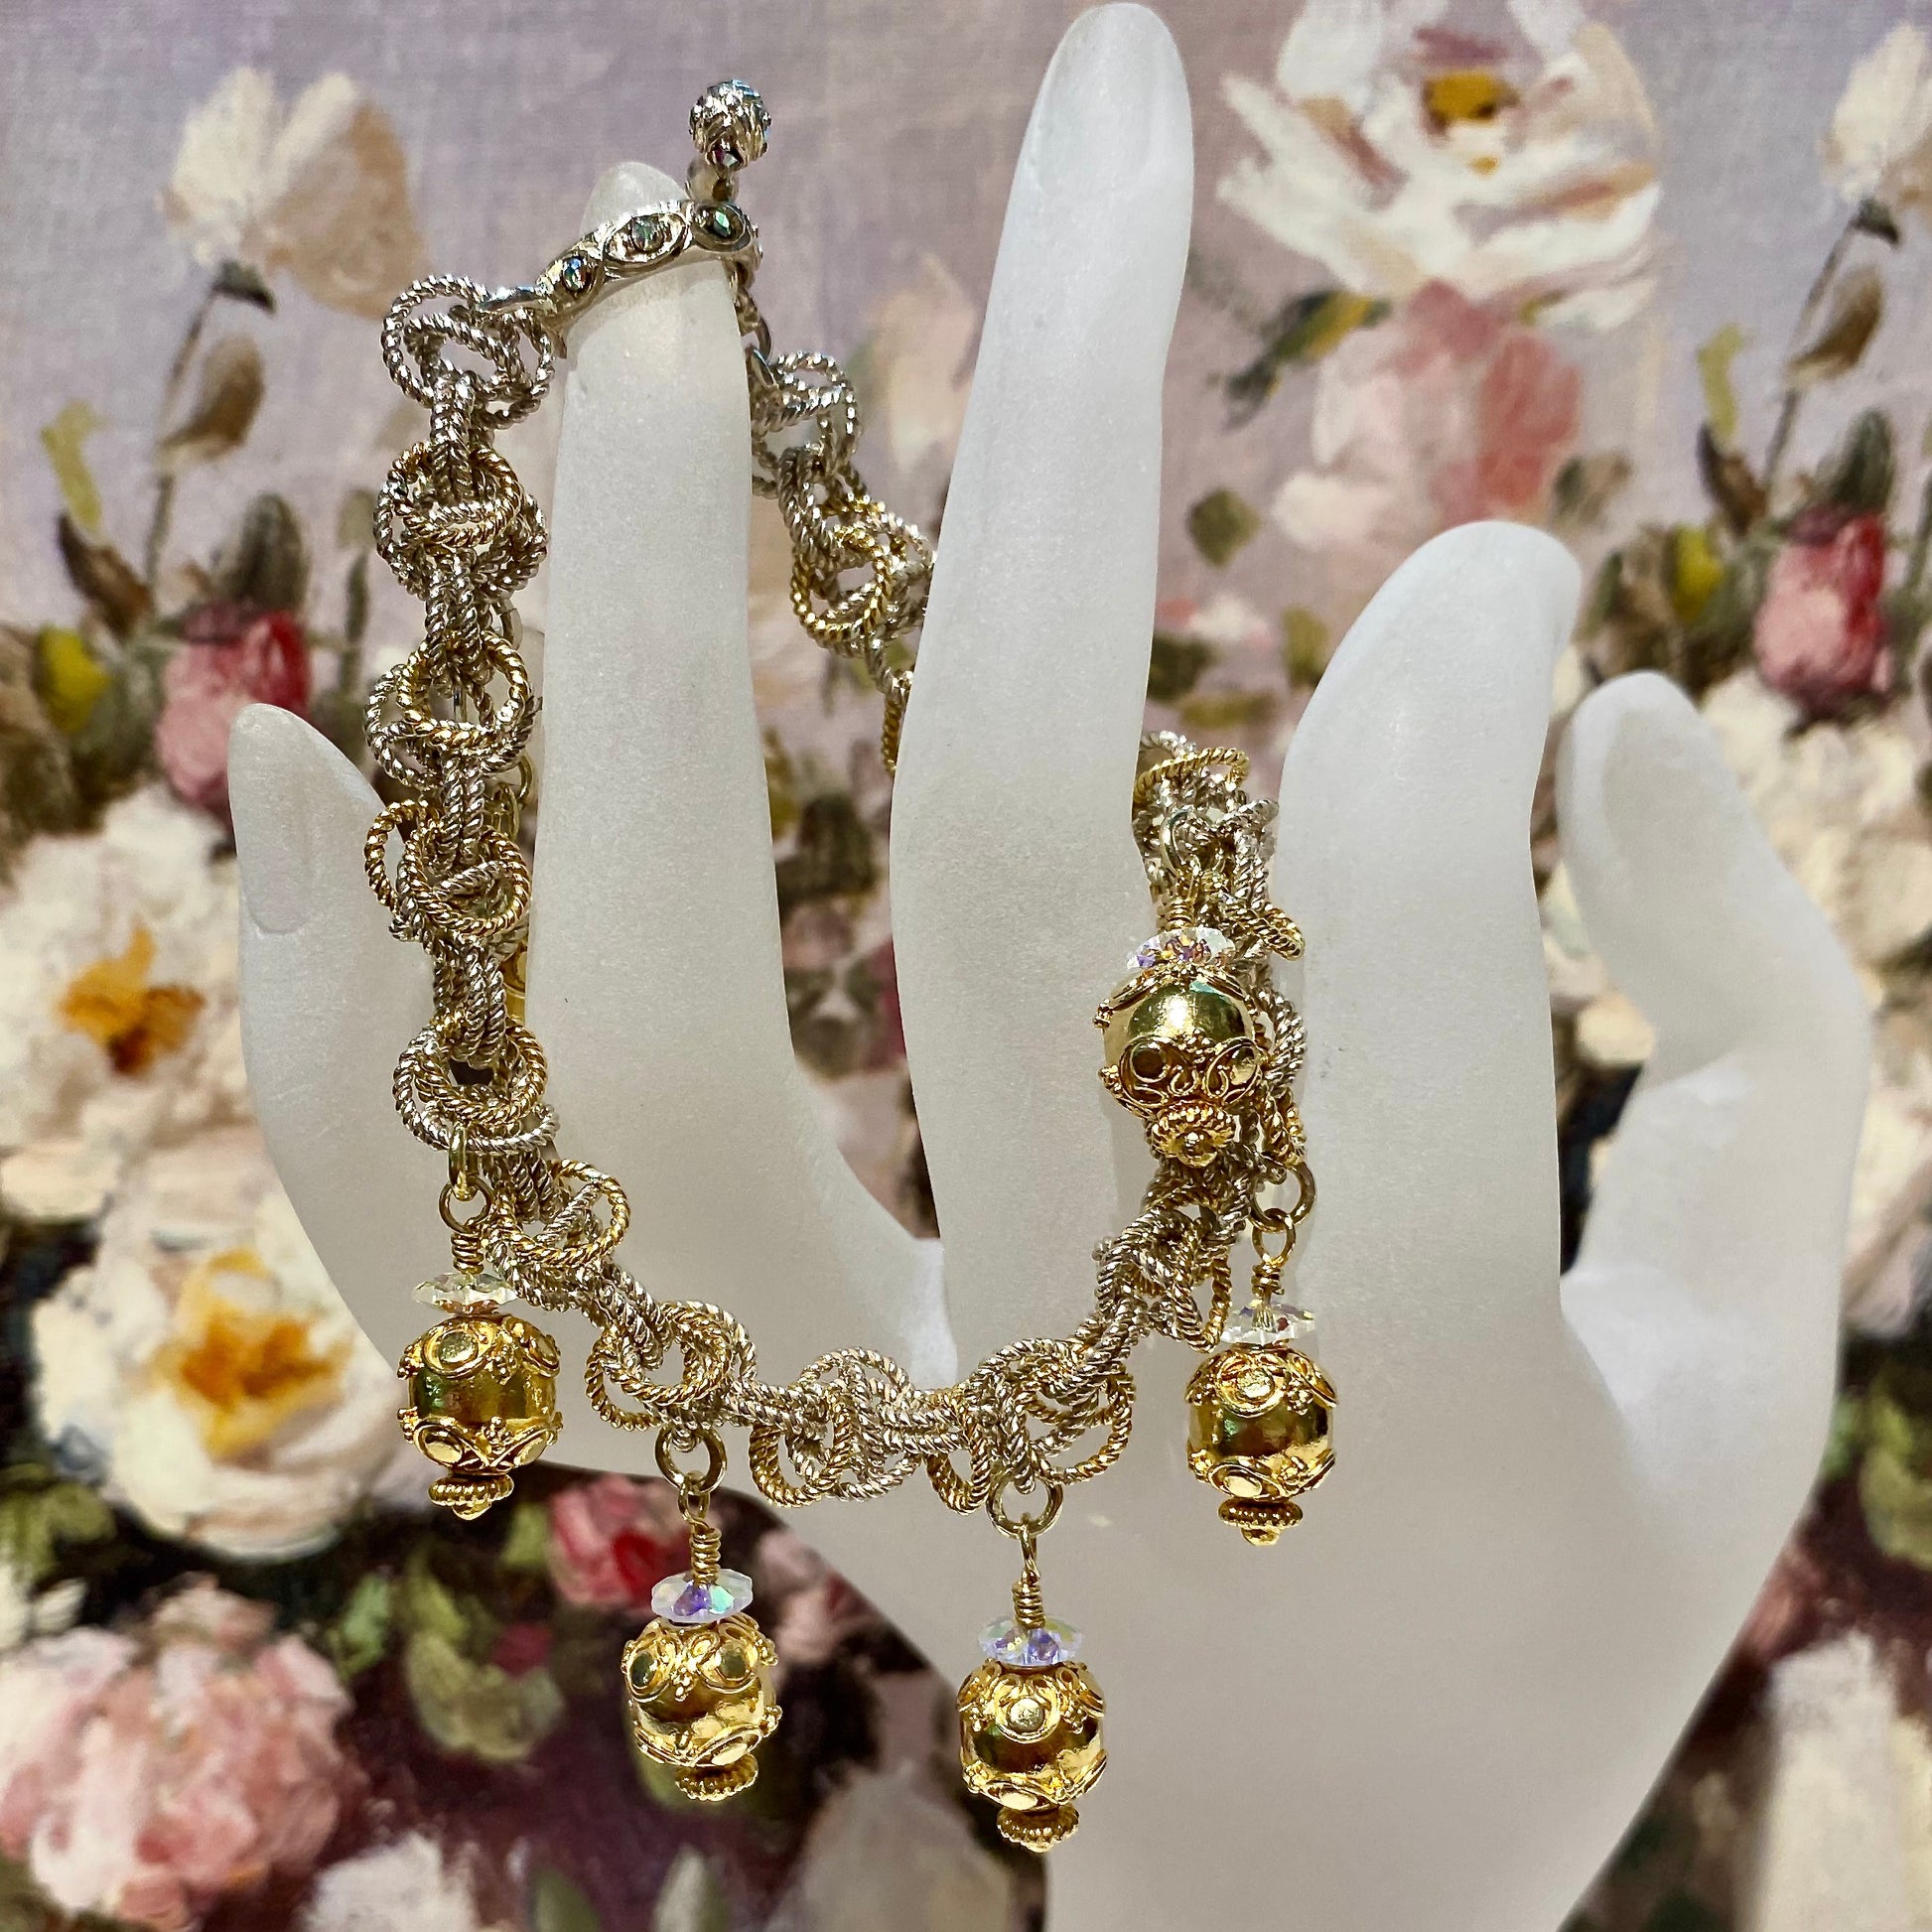 Ornate Classic Frilly Bracelet Sterling Silver & 24K Vermeil / Arpaia Lang